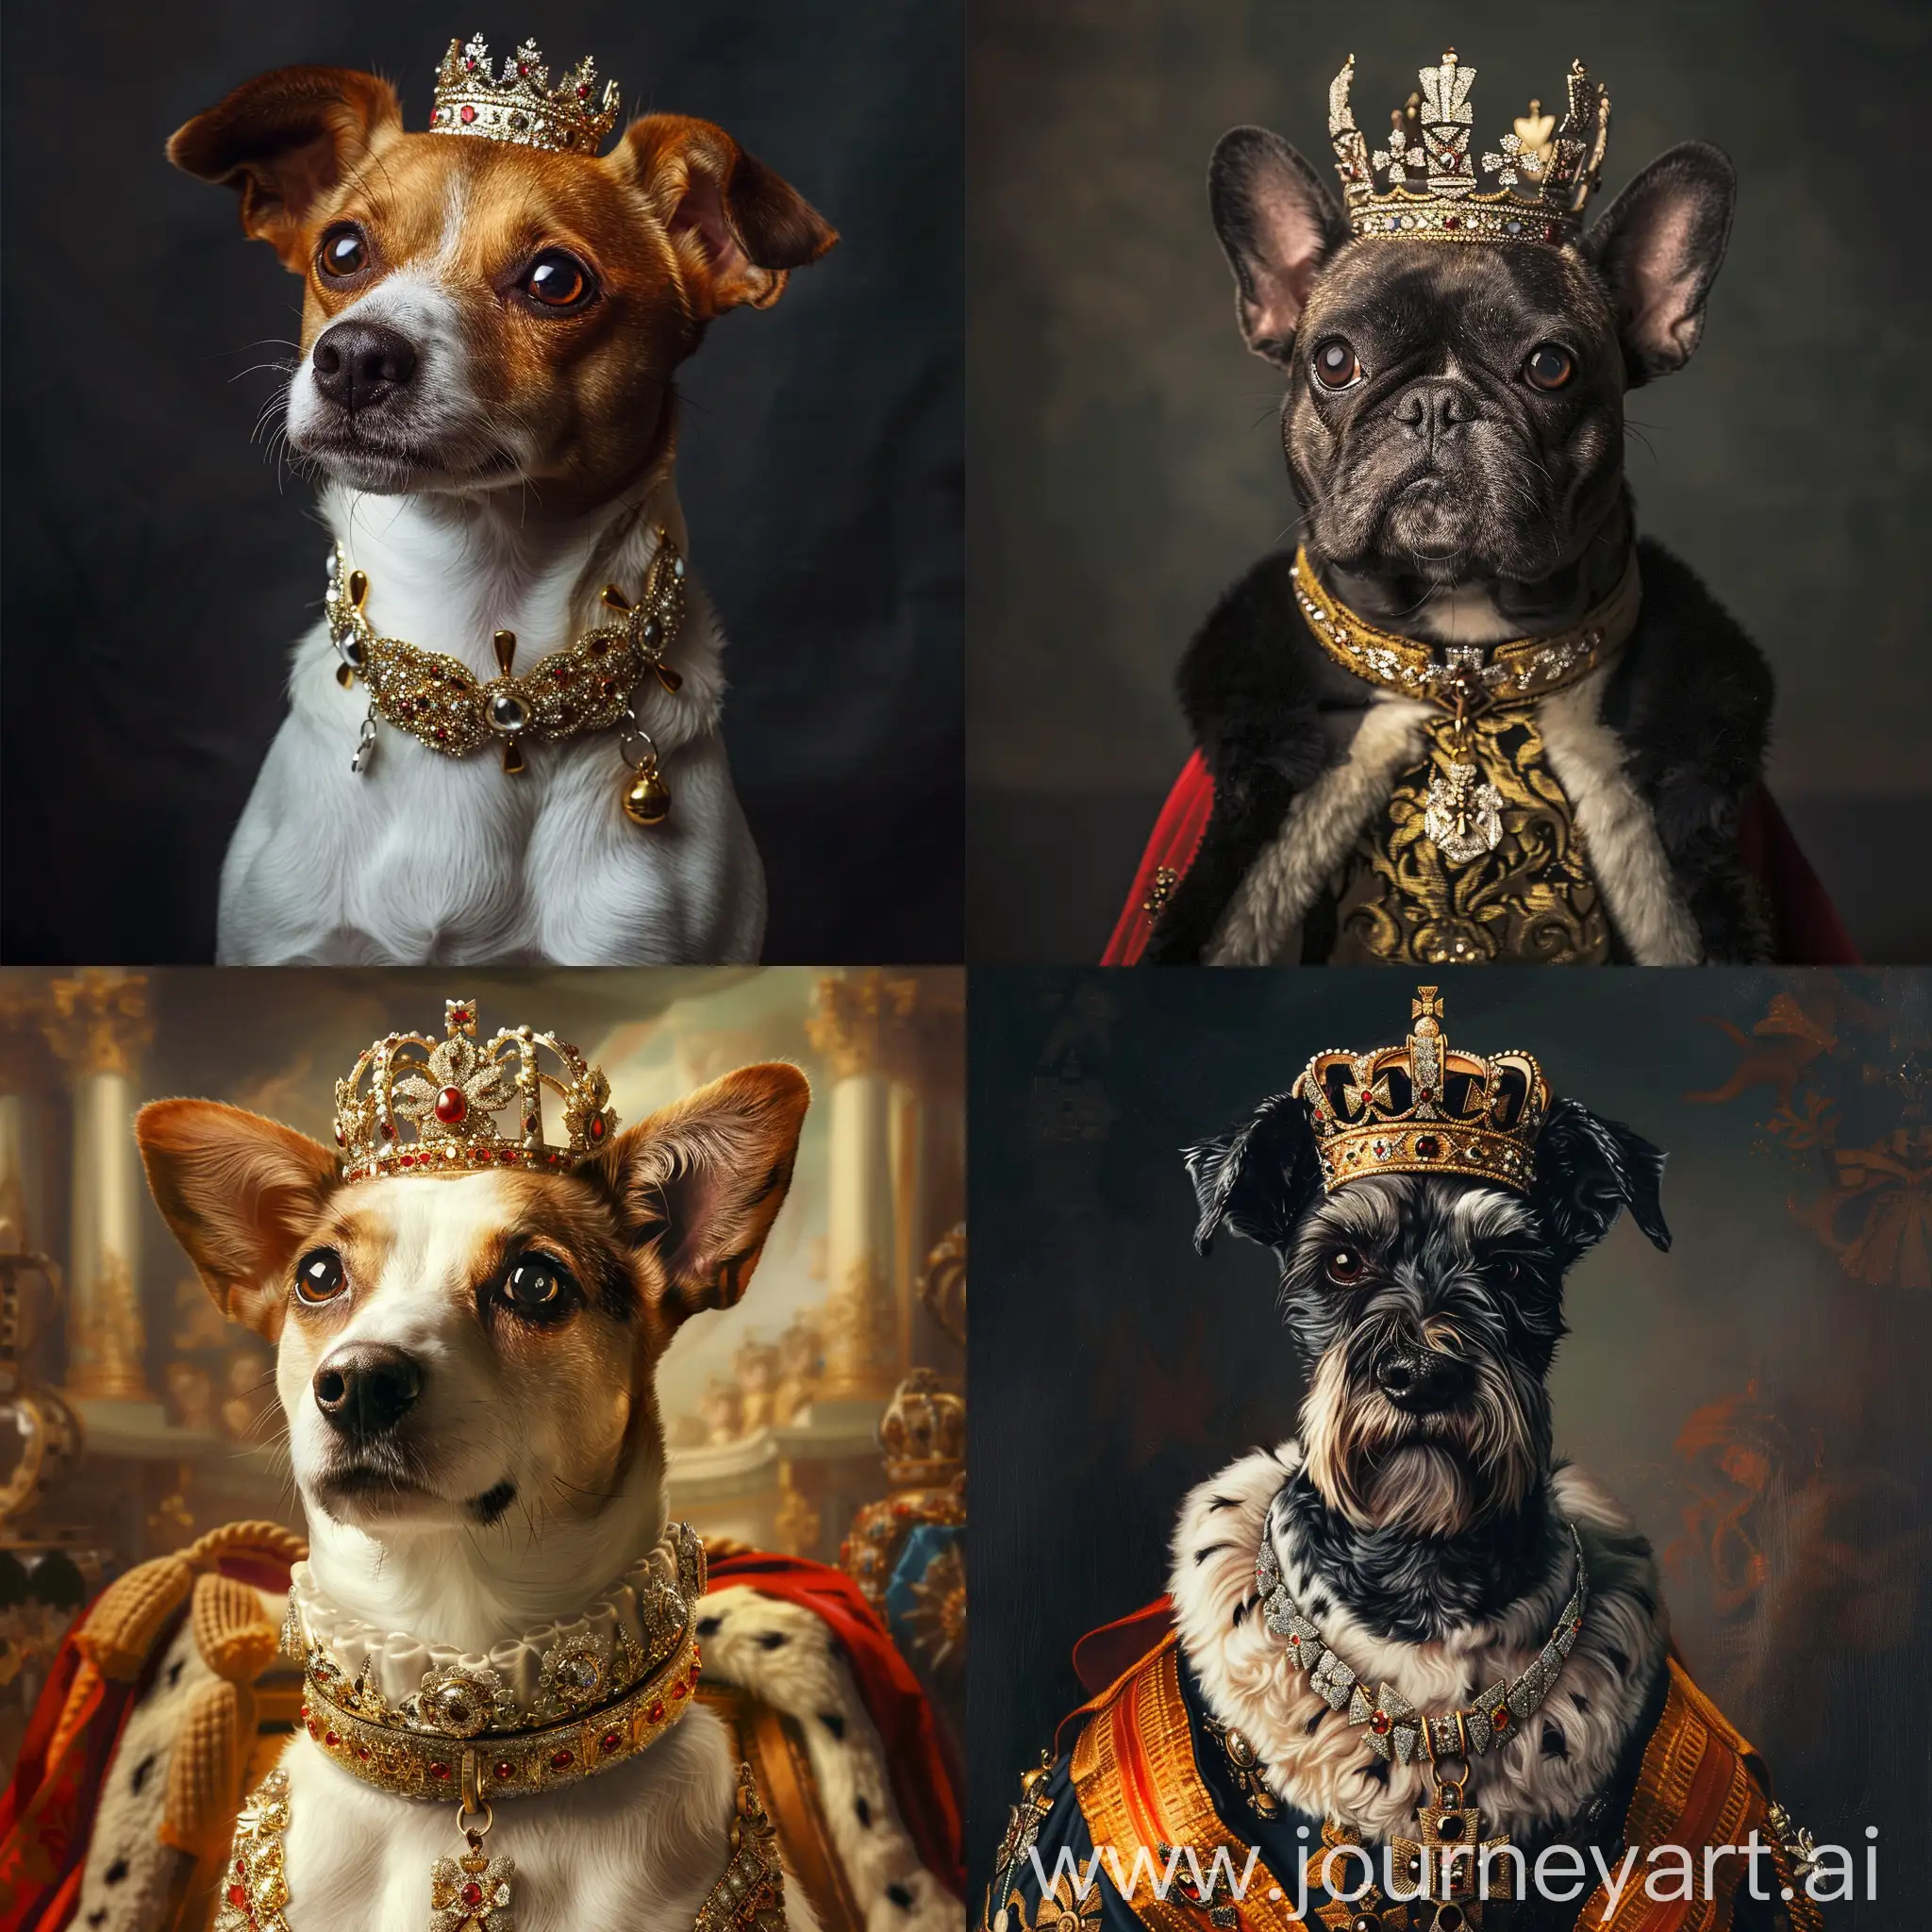 generate image of royal dog high resolution, nice, ar 4:3